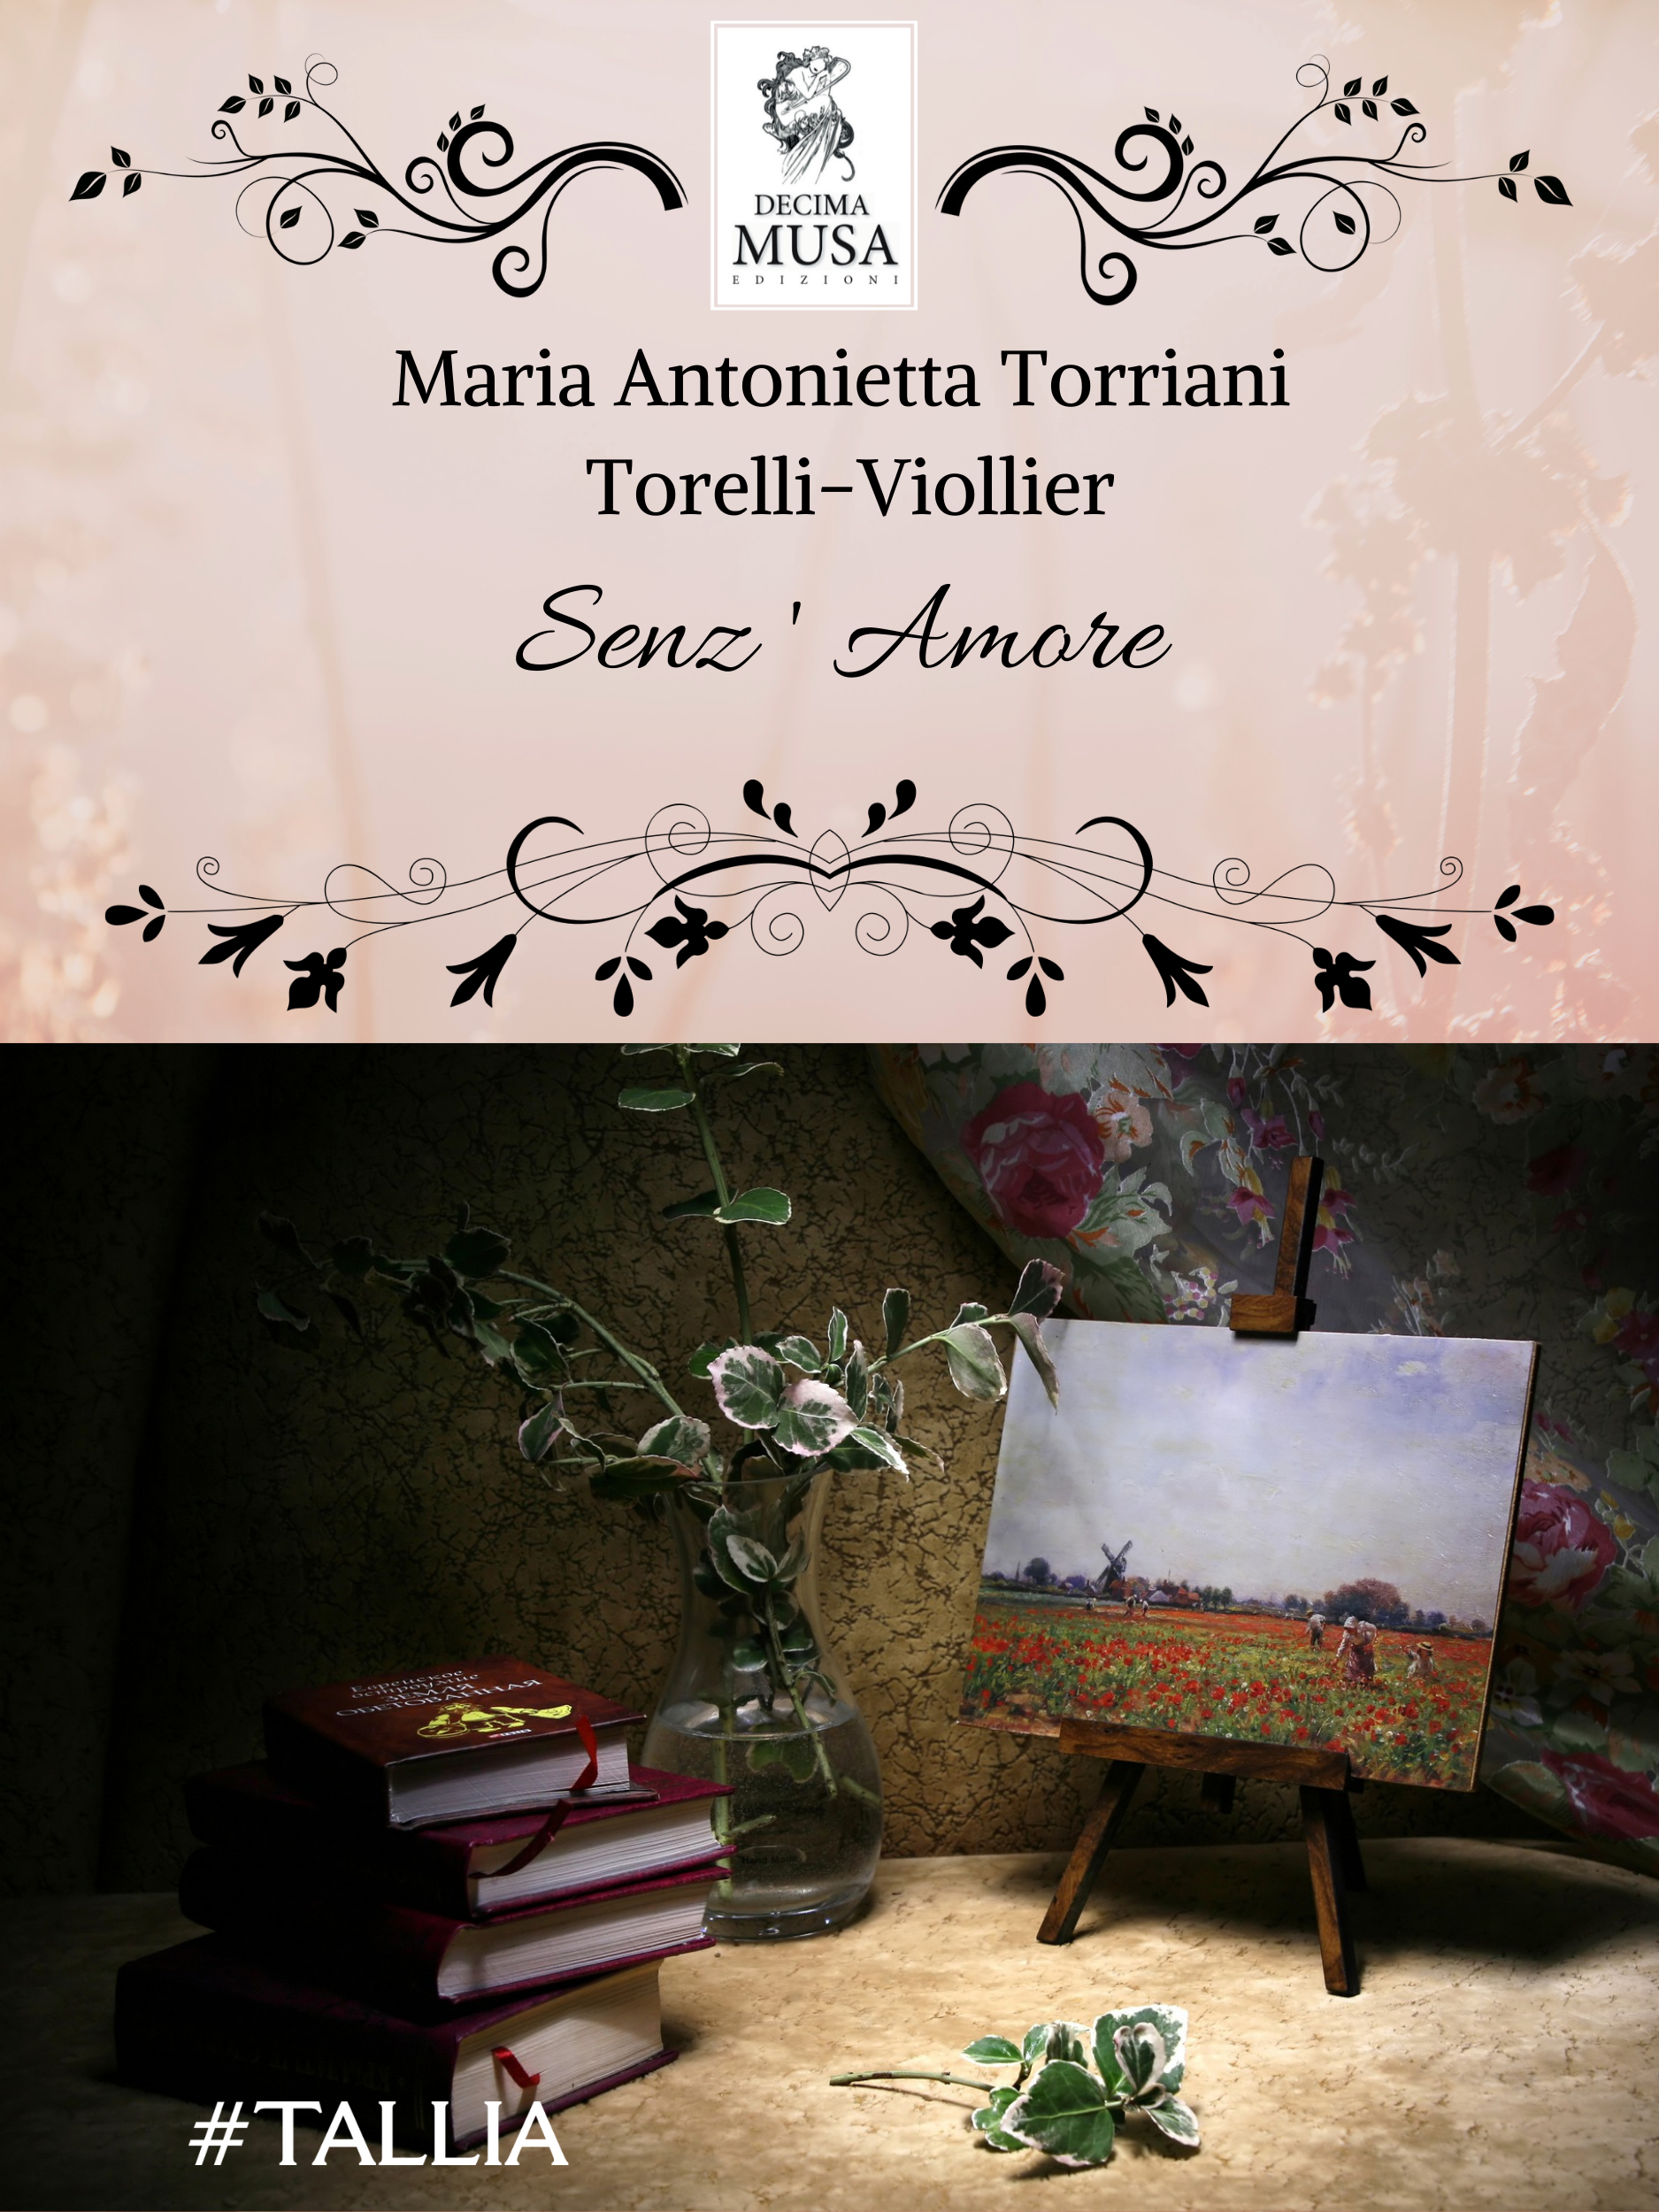 Maria Antonietta Torriani Torelli-Viollier Senz’Amore